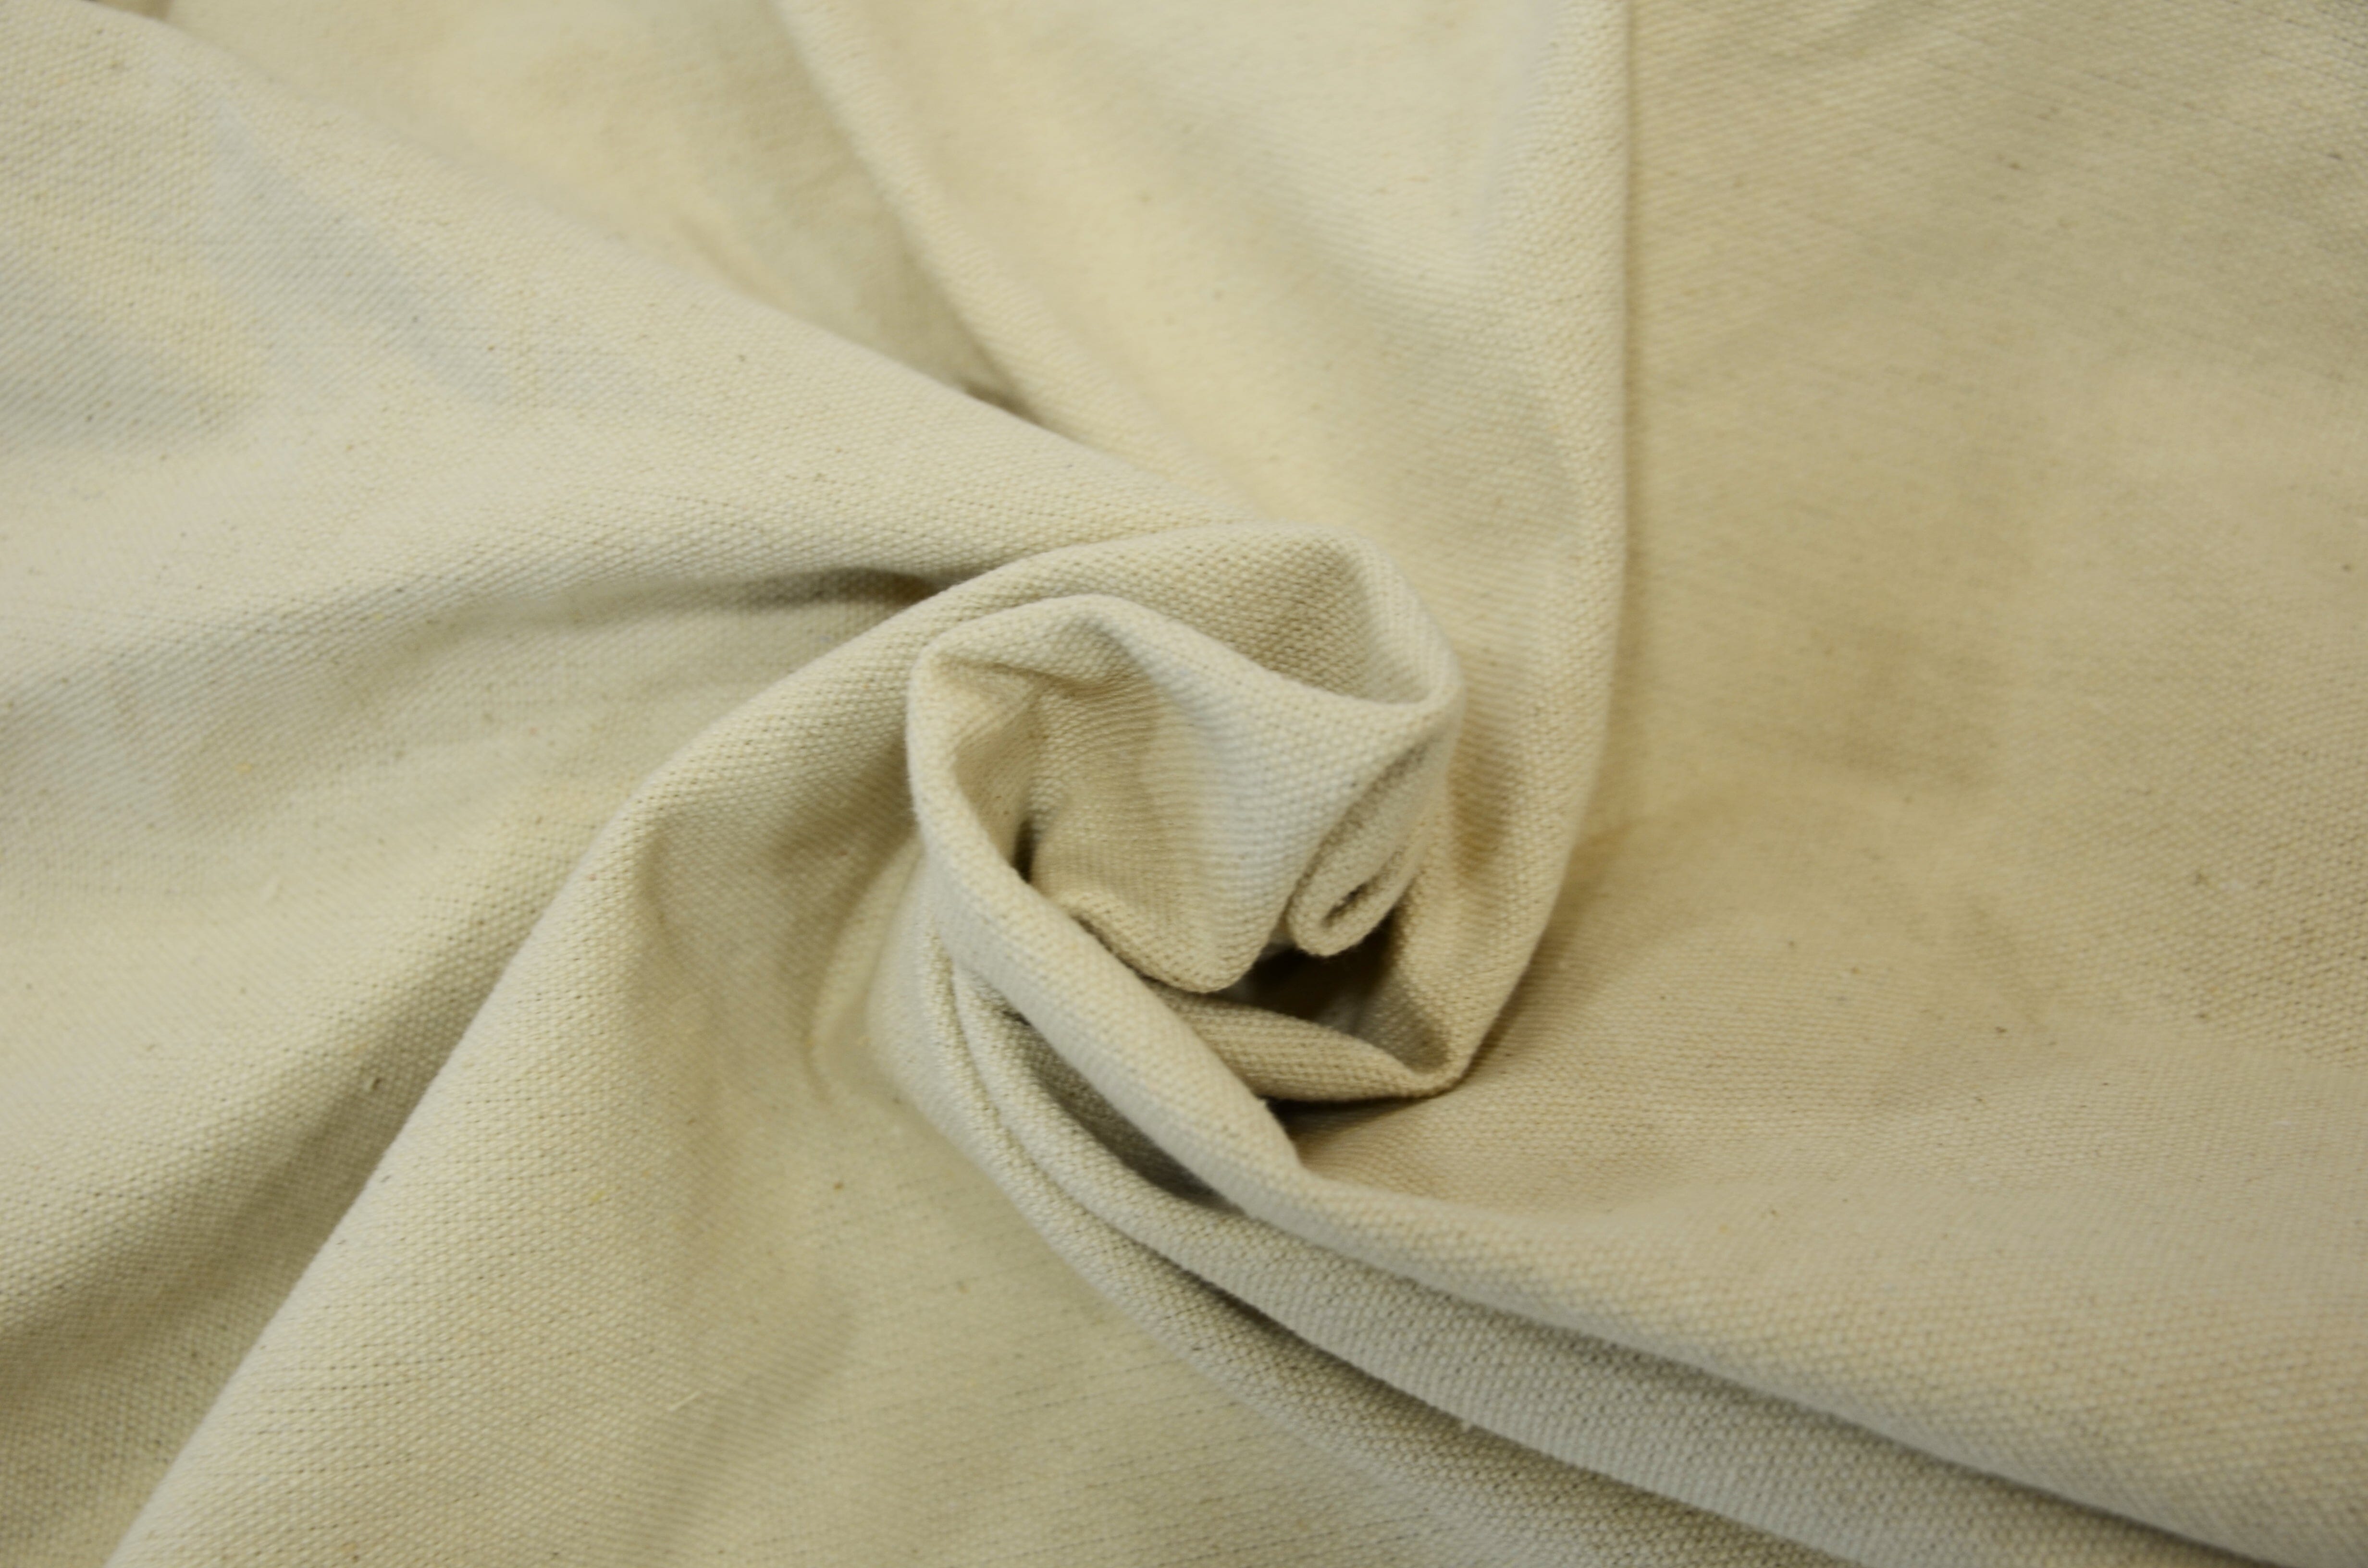 10 oz Natural Beige Unbleached Cotton Duck 64 Inch Canvas Fabric